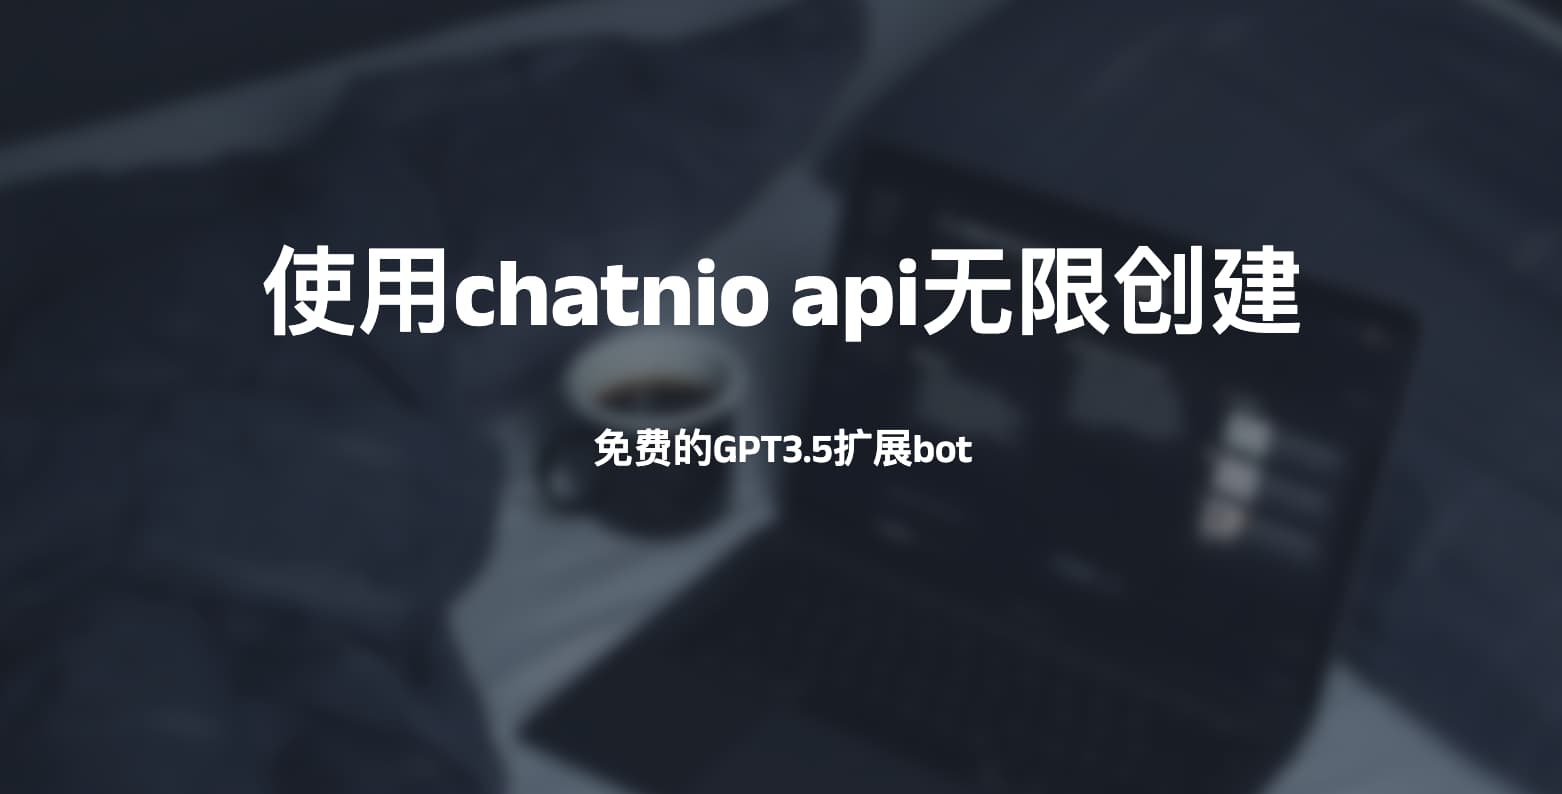 使用chatnio api无限创建免费的GPT3.5扩展bot